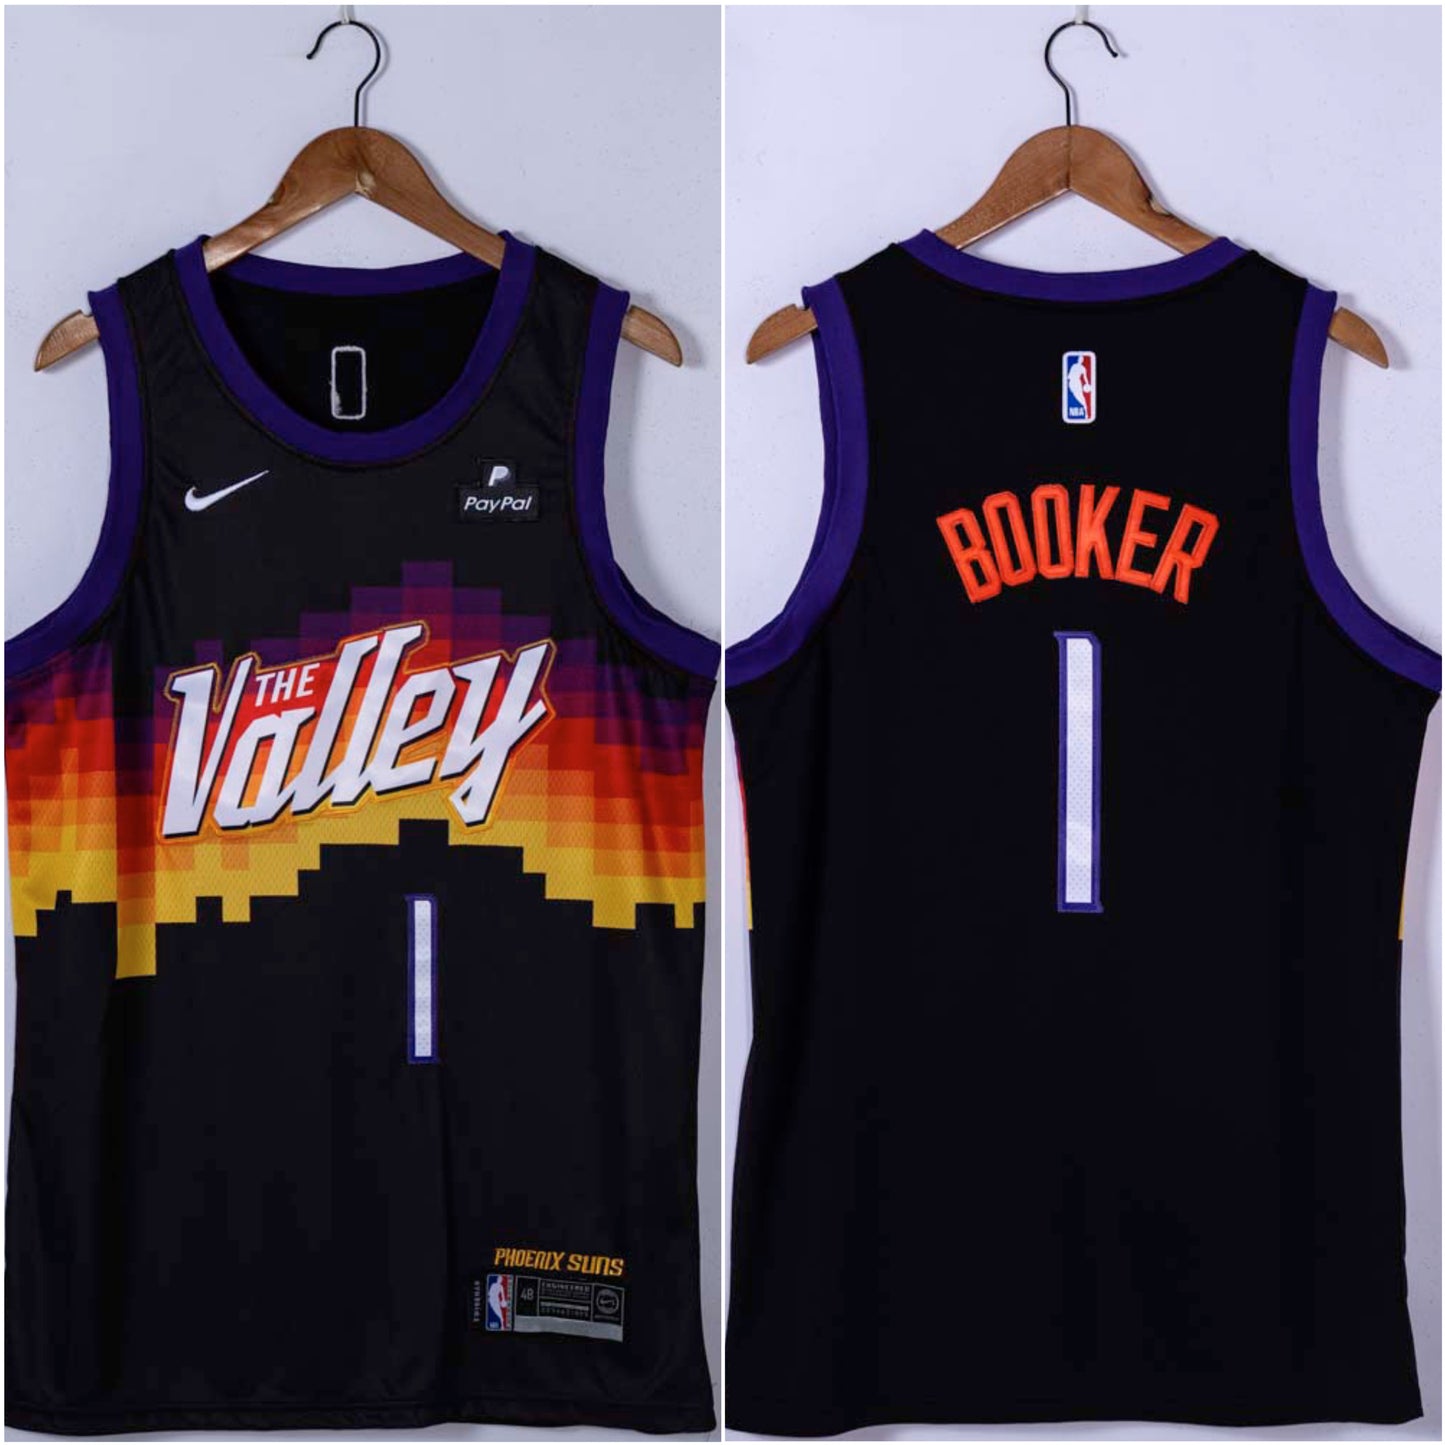 BOOKER 1 Black The Valley Phoenix Suns NBA Jersey